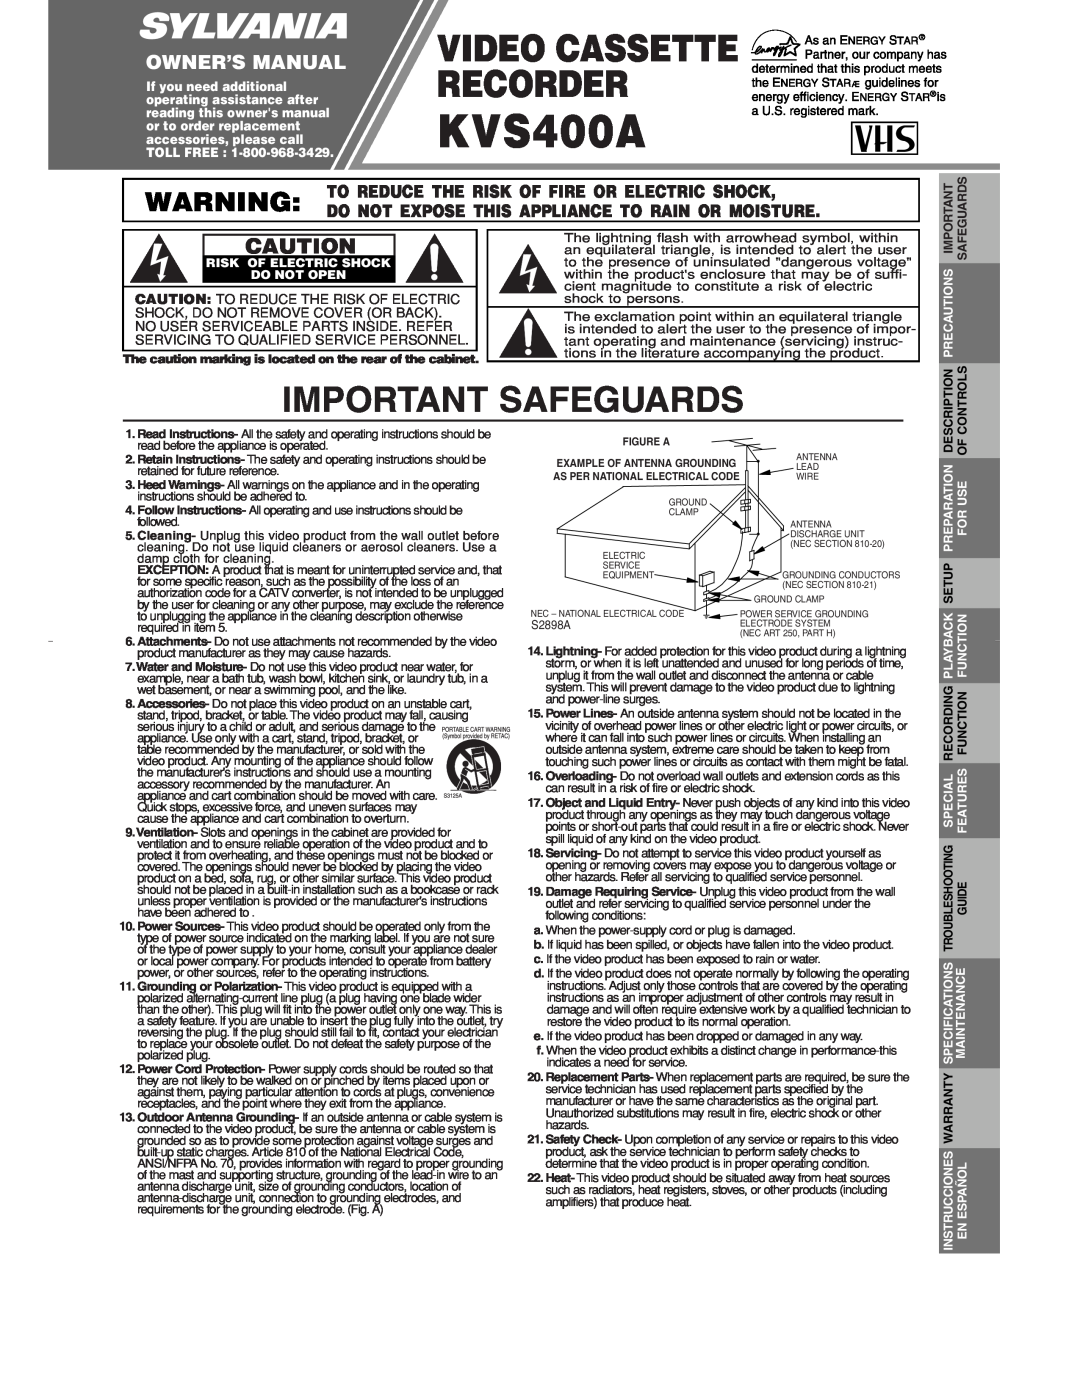 Sylvania KVS400A owner manual Owner’S Manual, Important Safeguards, Video Cassette Recorder, Description, Controls 